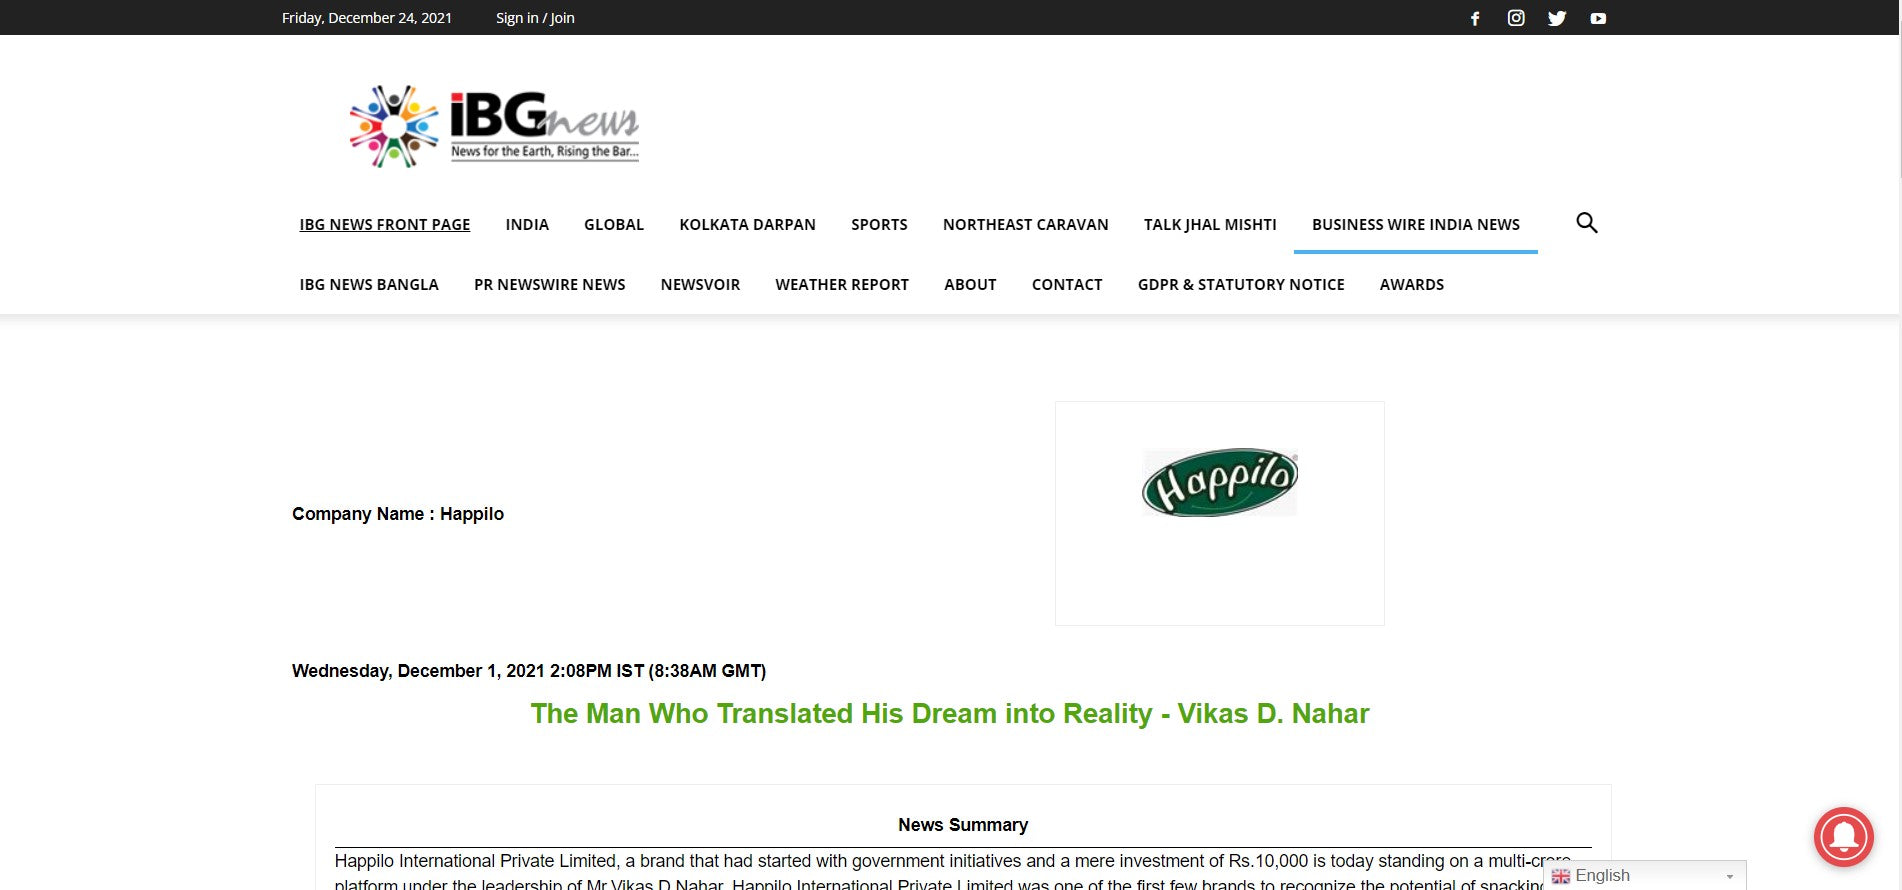 The Man Who Translated His Dream into Reality - Vikas D. Nahar